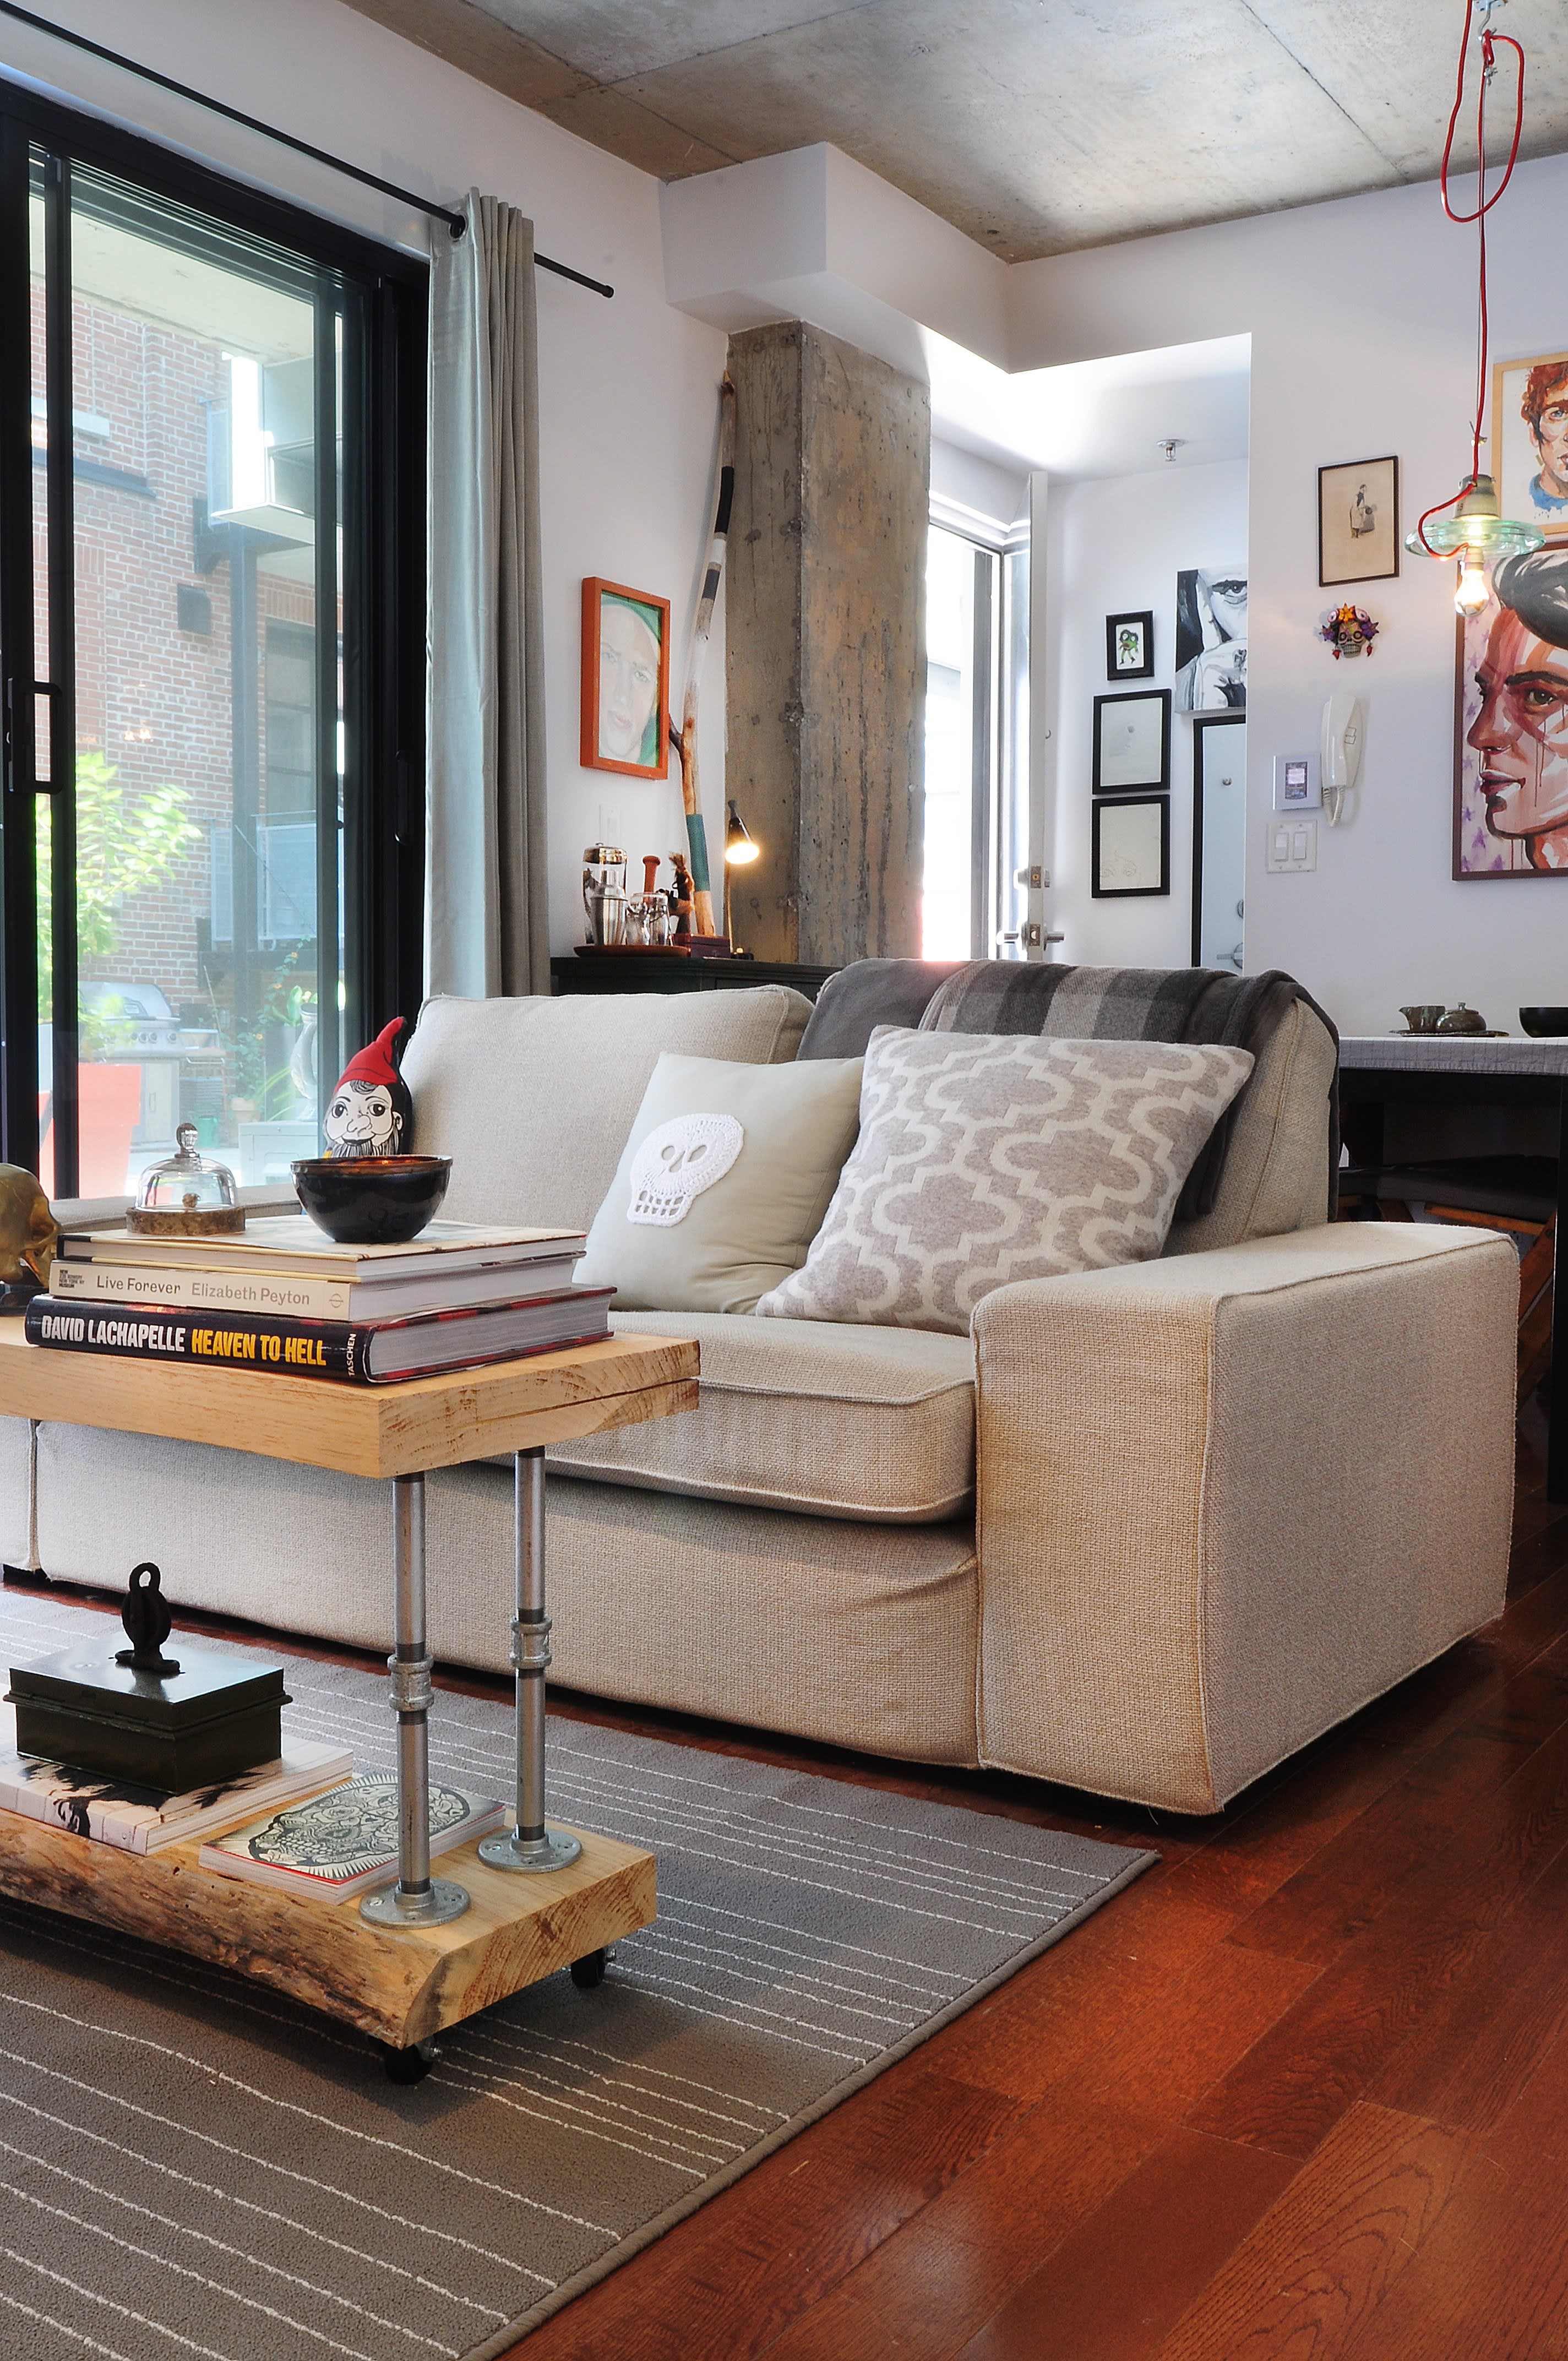 5 Stunning Art Studio Design Ideas for Small Spaces — Freshouz Home &  Architecture Decor